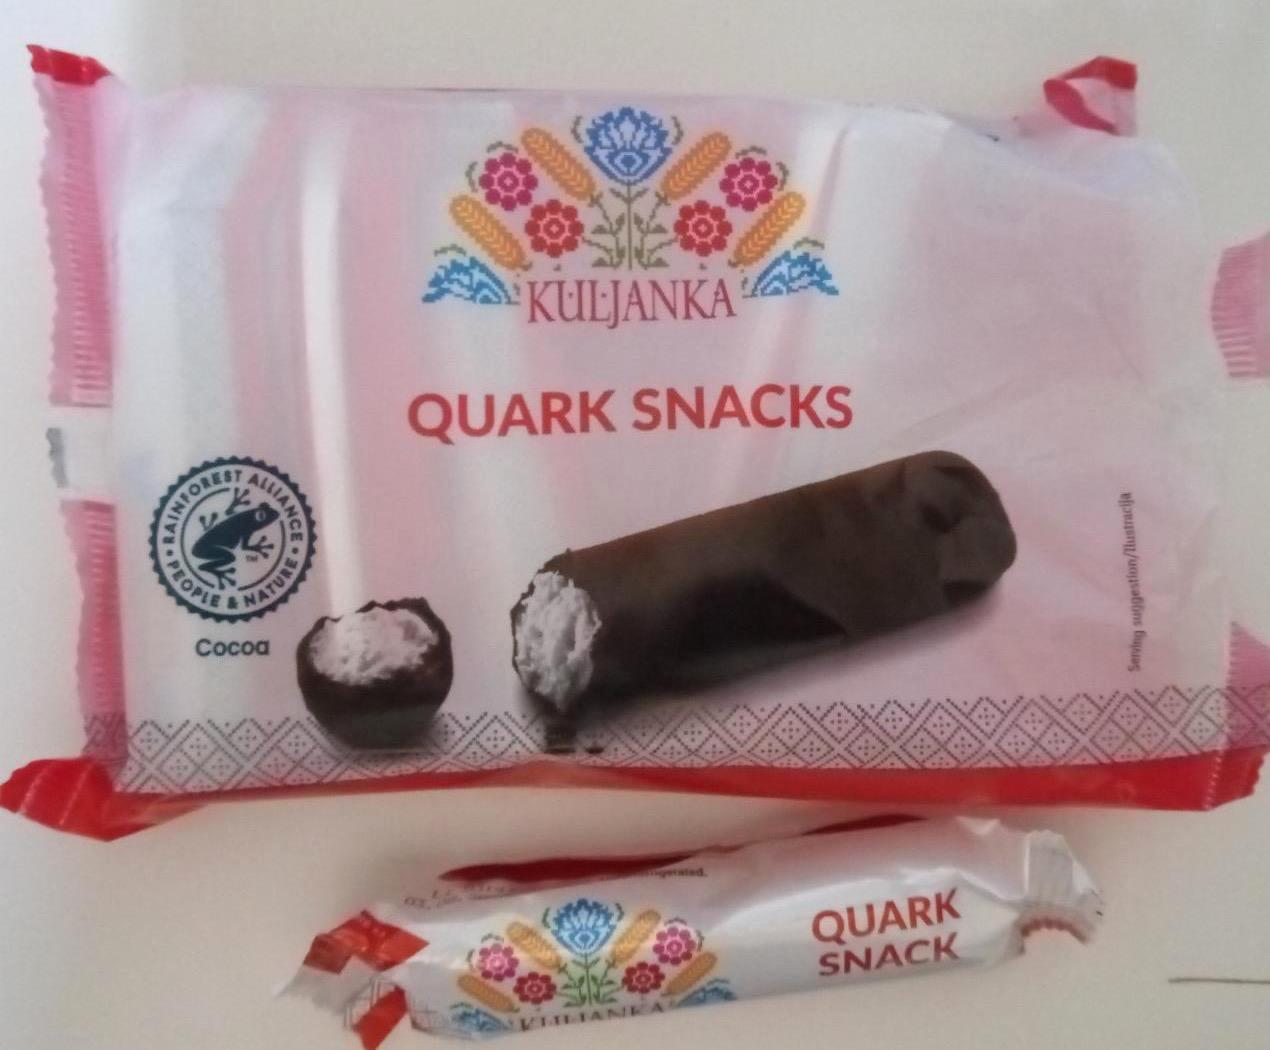 Képek - Quark snacks Túrórudi Kuljanka